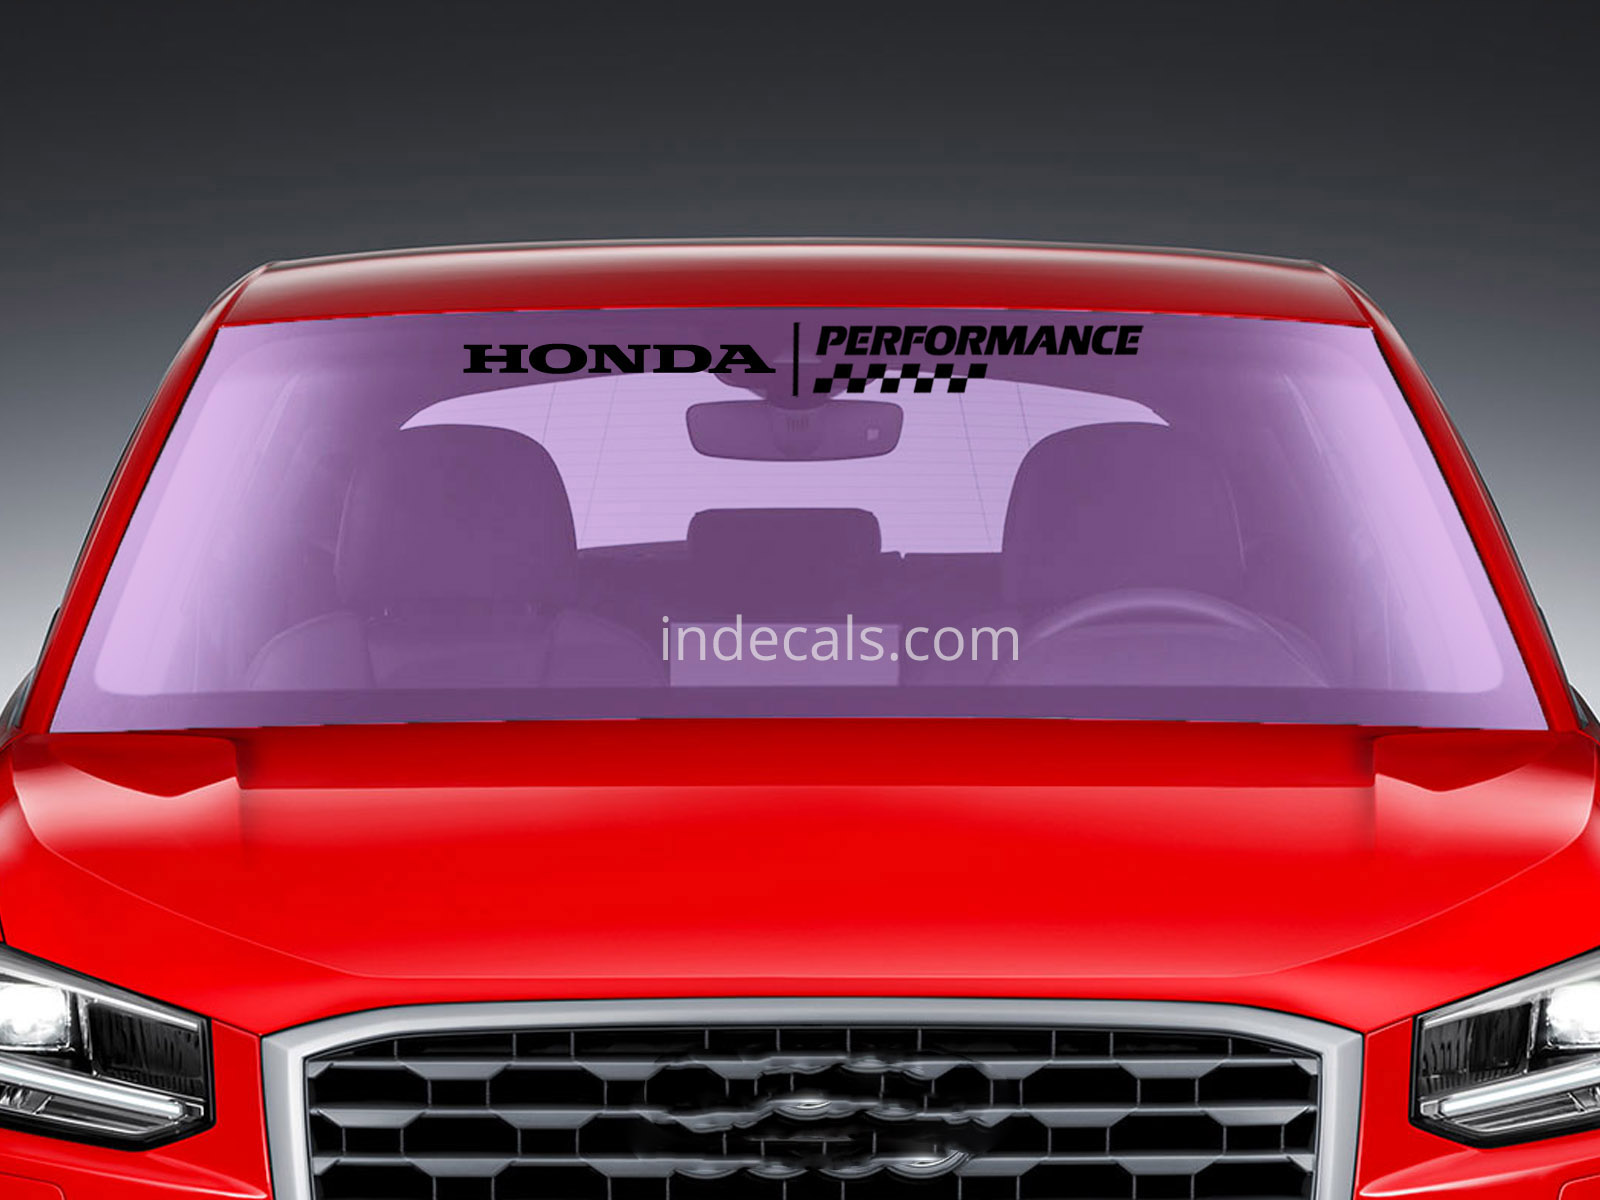 1 x Honda Performance Sticker for Windshield or Back Window - Black